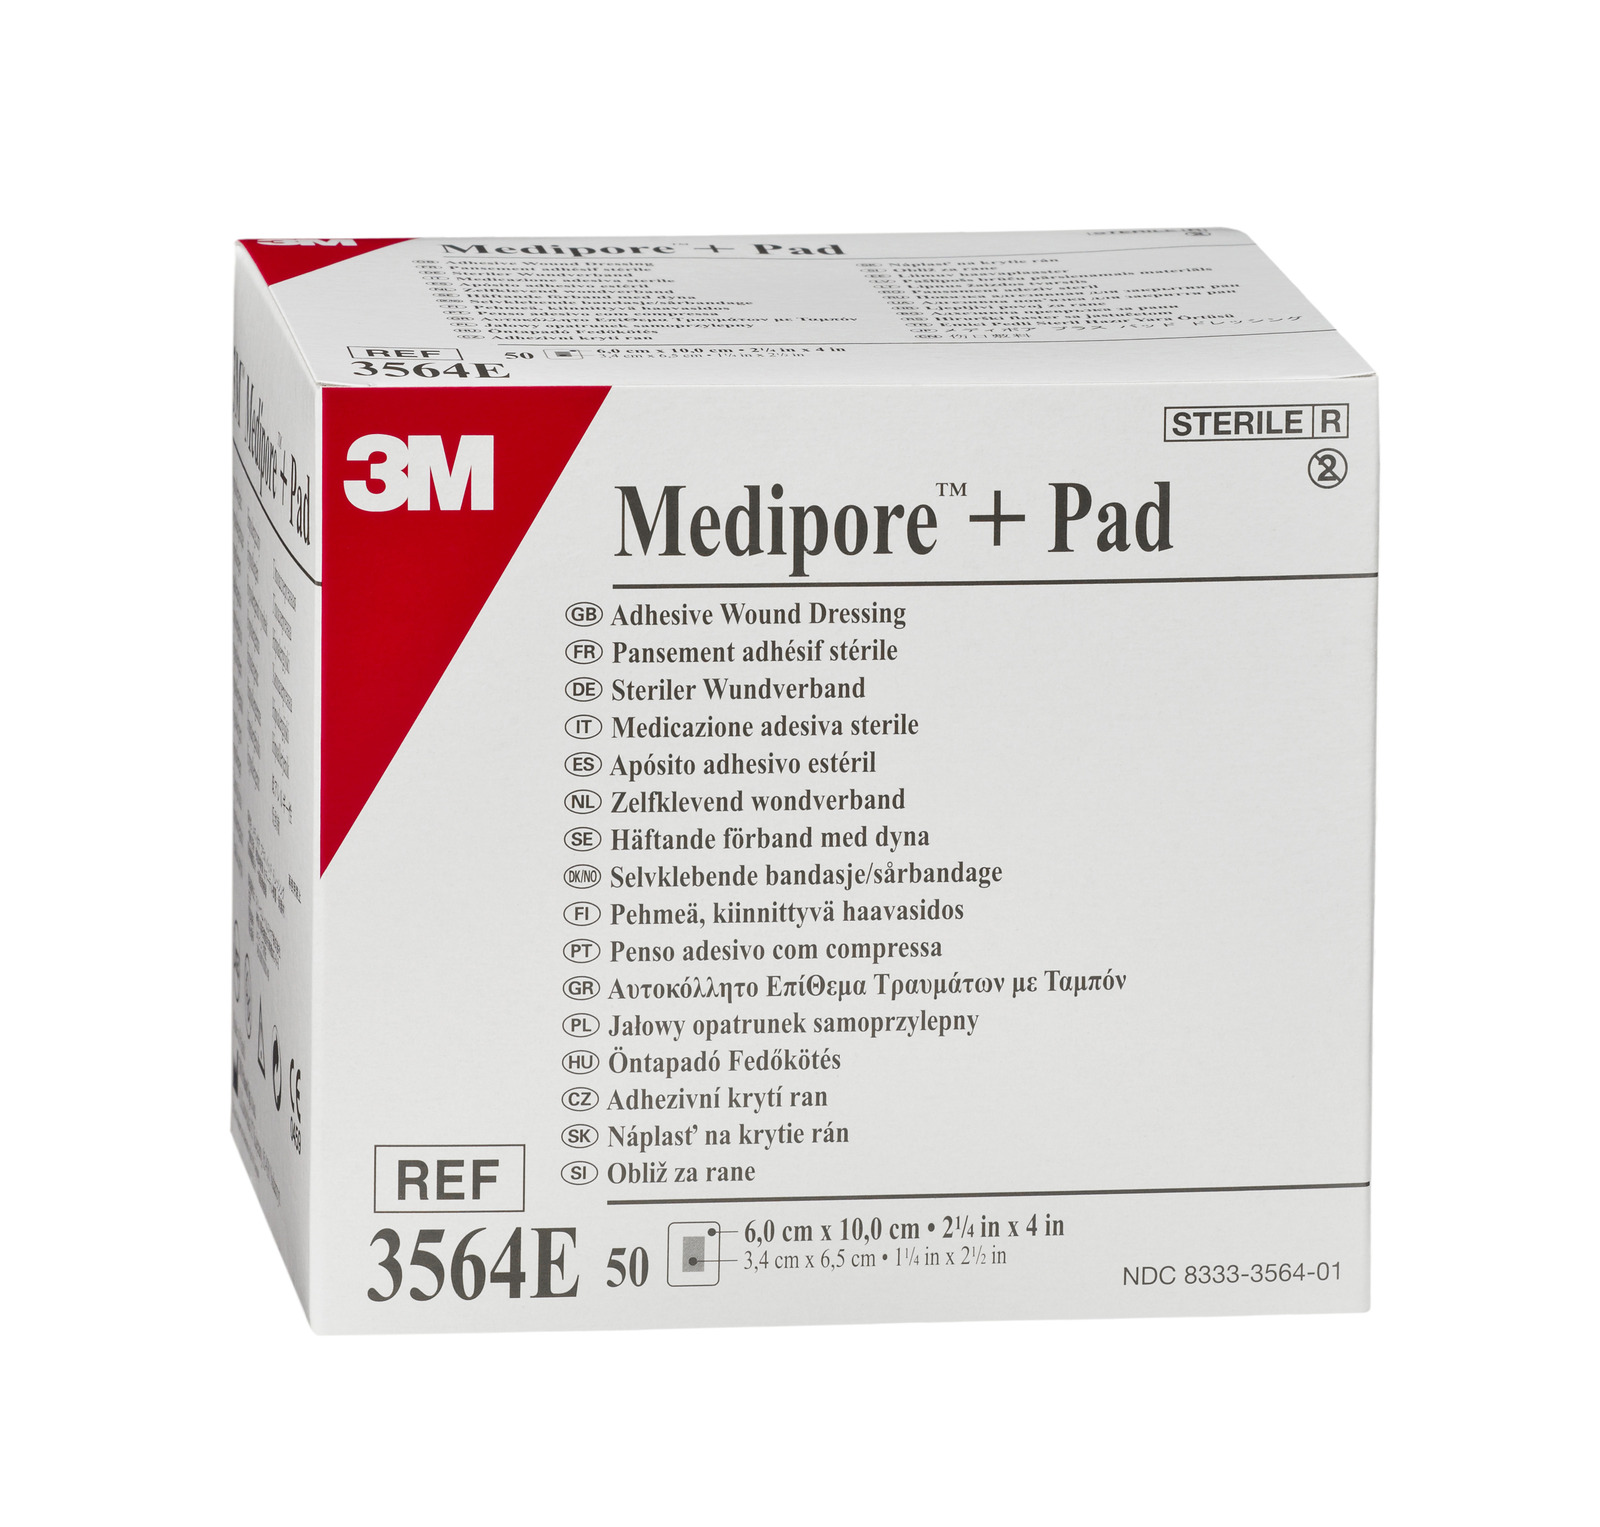 3M™ Medipore™ + Pad Steriler Wundverband mit Wundauflage, 3564E, 6 cm x 10 cm, 50 Stück/Packung